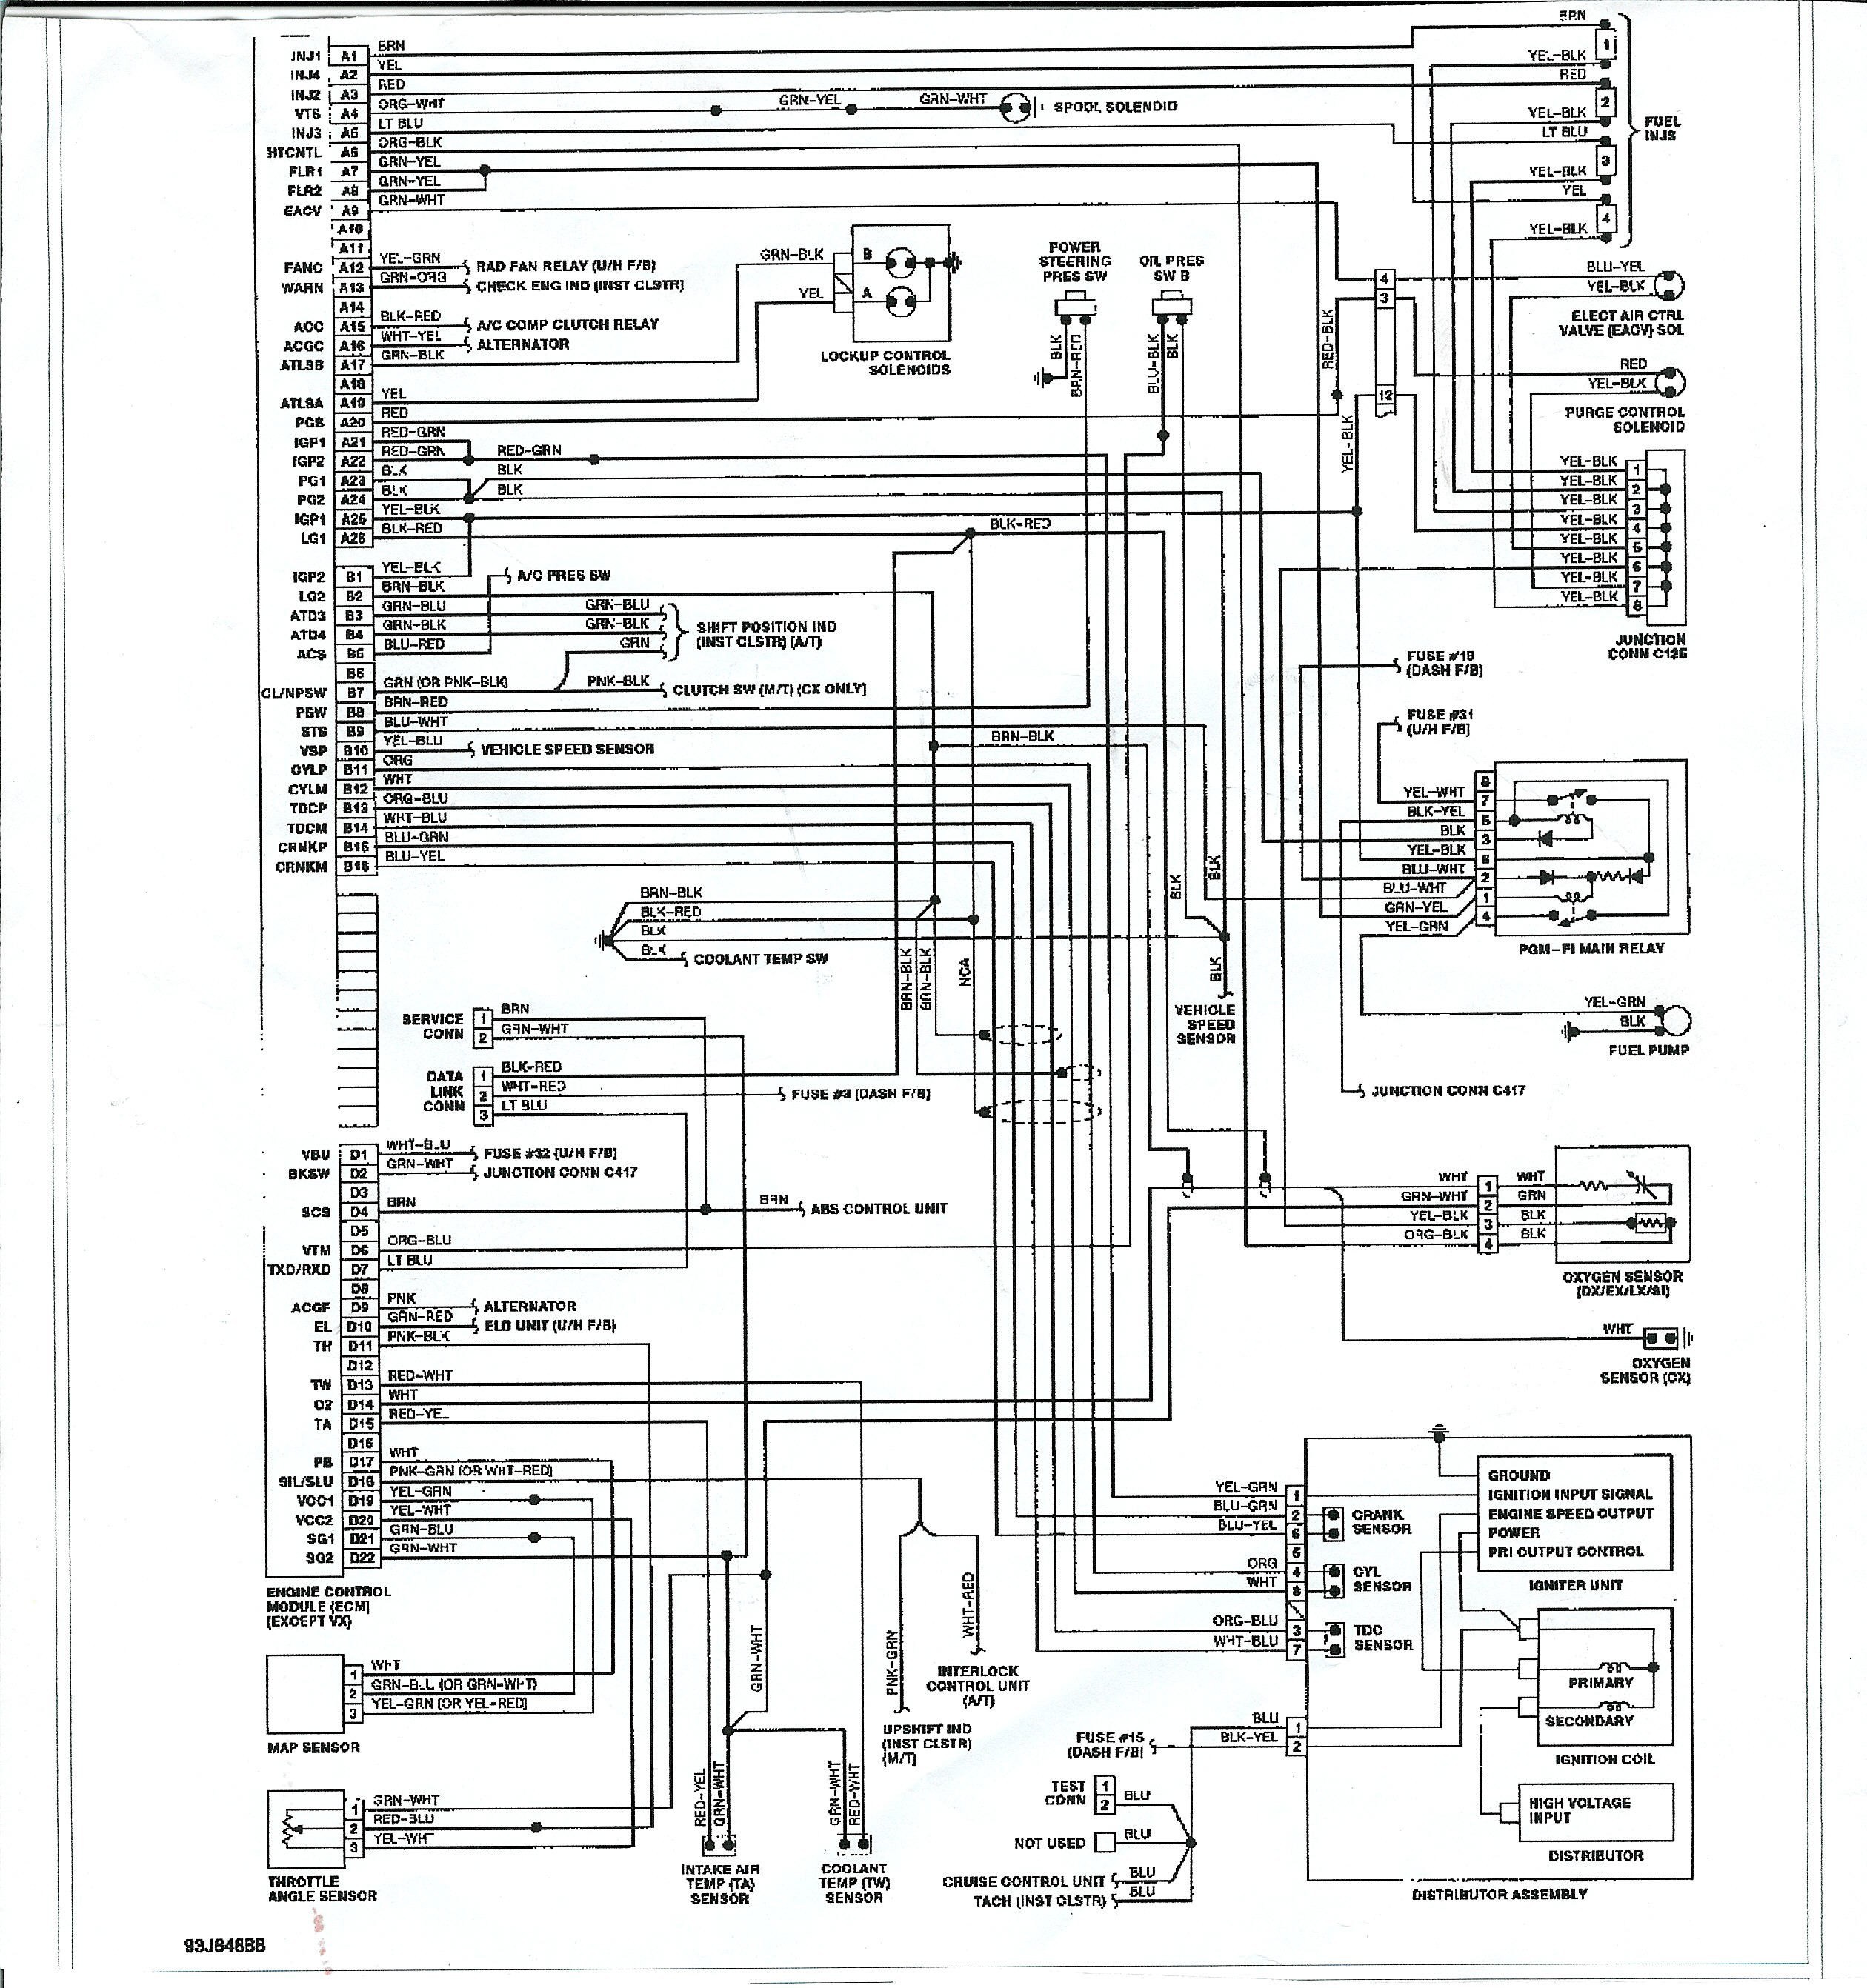 2003 Honda Civic Parts Diagram Honda Civic Transmission Wiring Diagram Wiring Diagram Database Of 2003 Honda Civic Parts Diagram